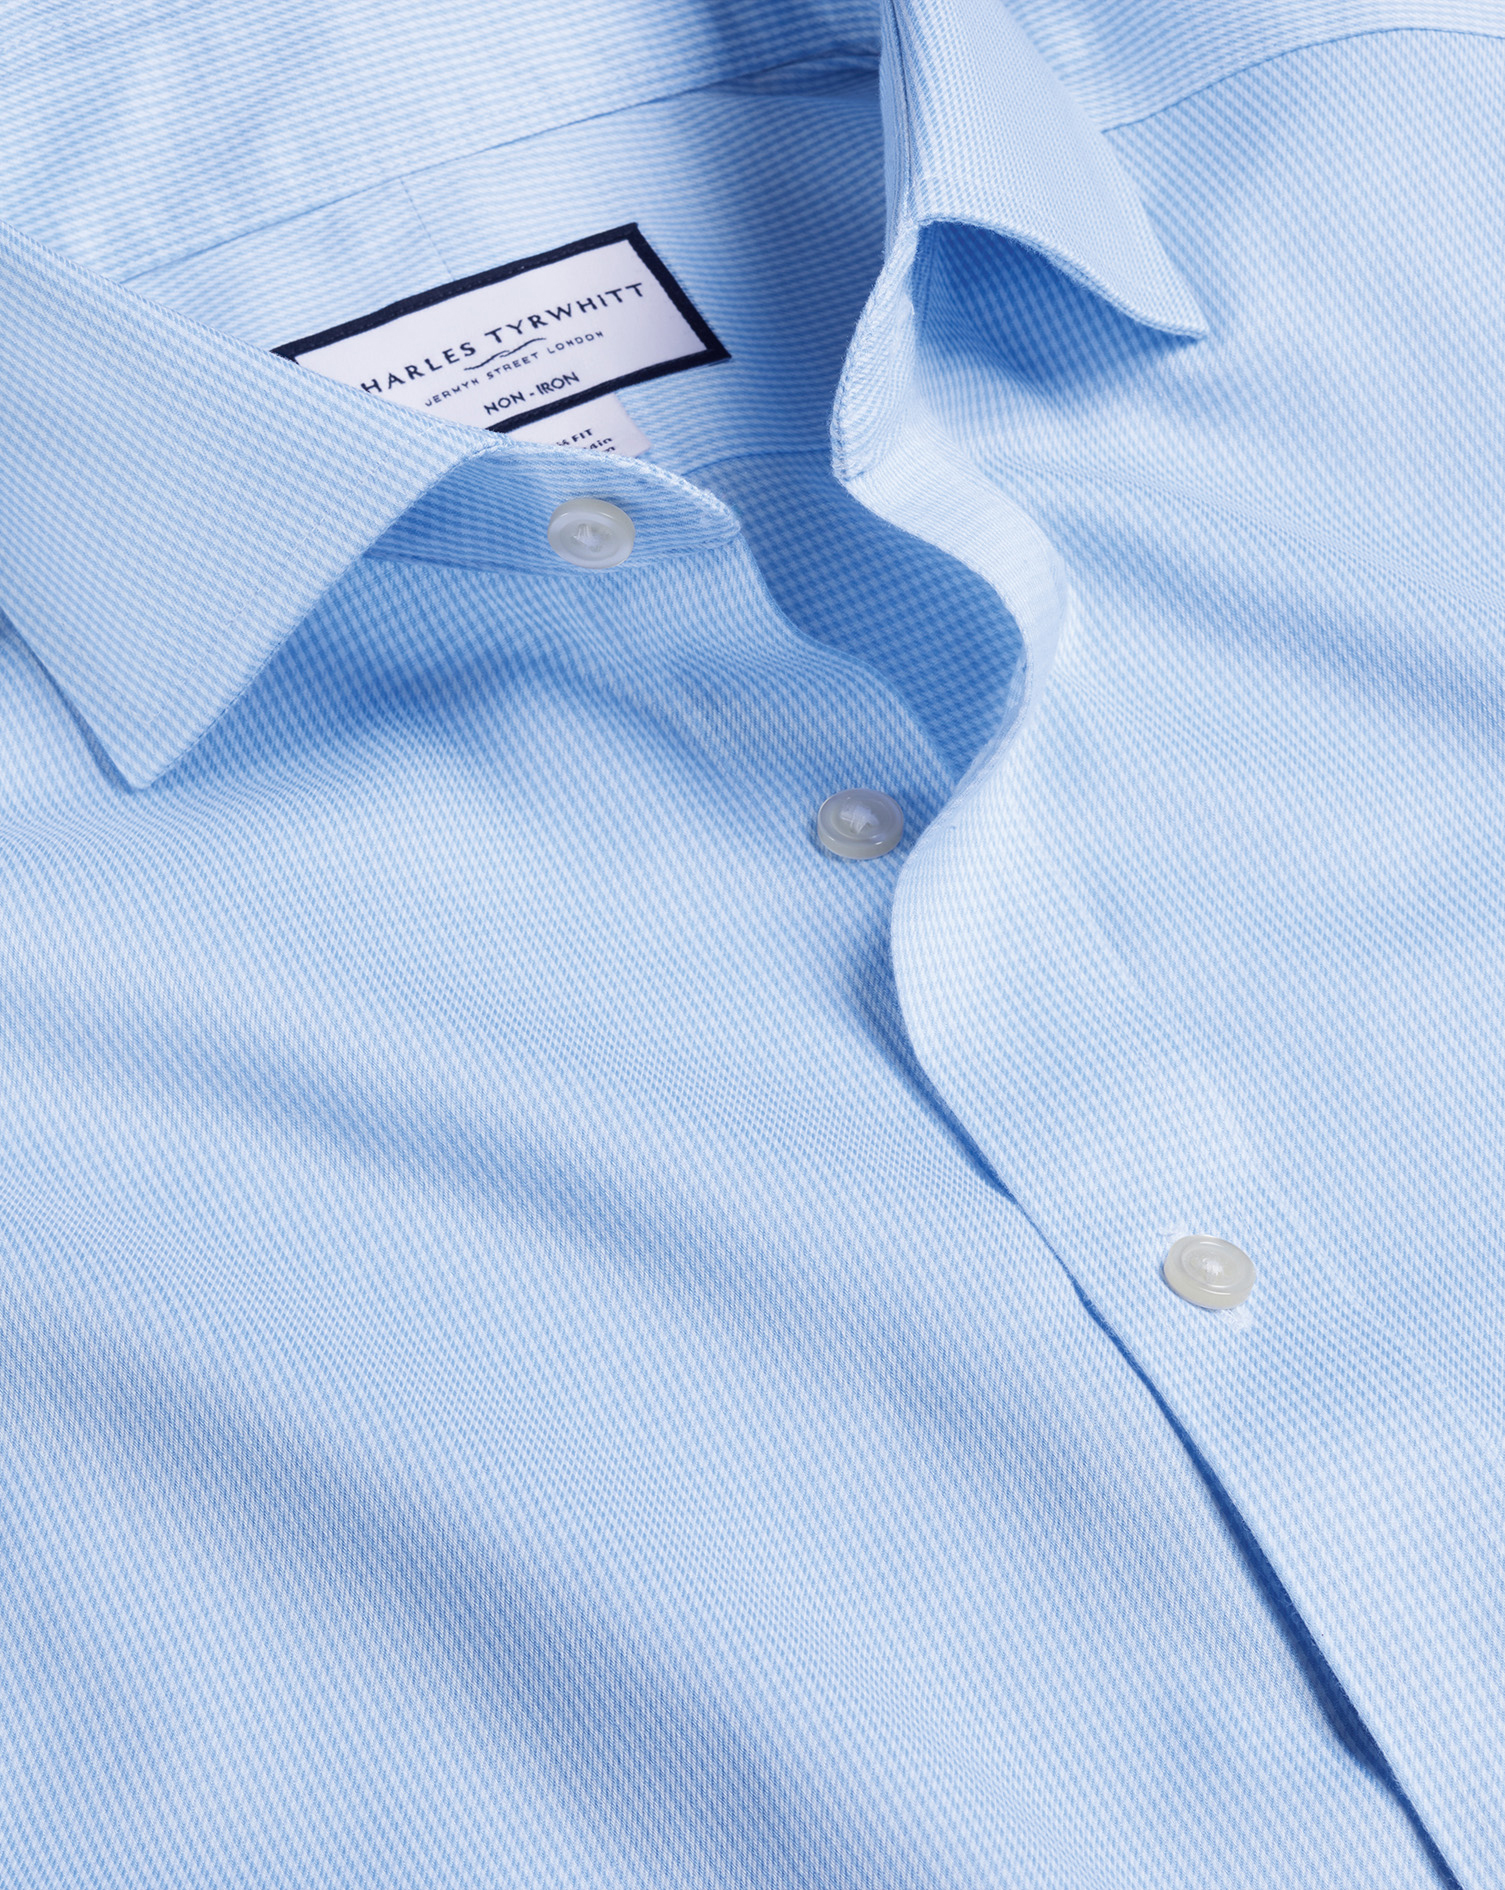 Men's Charles Tyrwhitt Cutaway Collar Non-Iron Puppytooth Dress Shirt - Sky Blue French Cuff Size Me